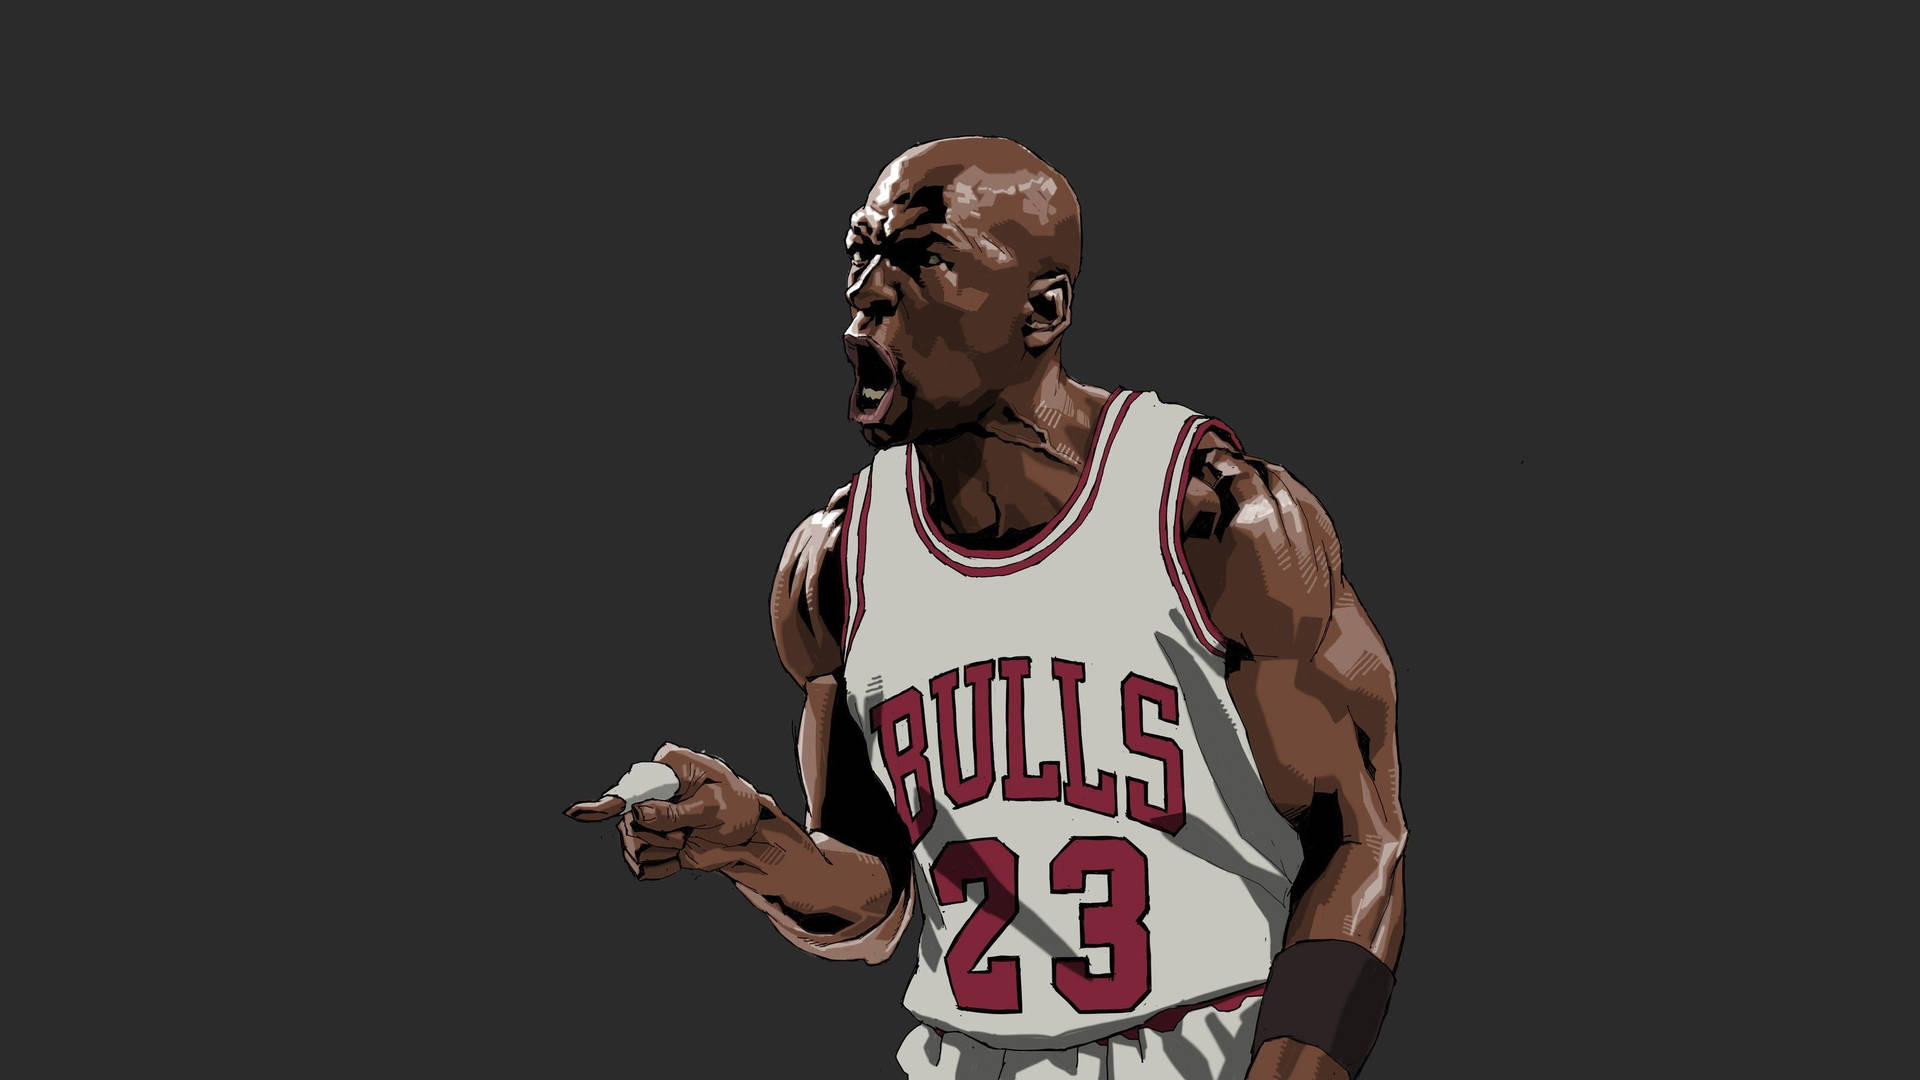 Michael Jordan 3200X1800 Wallpaper and Background Image